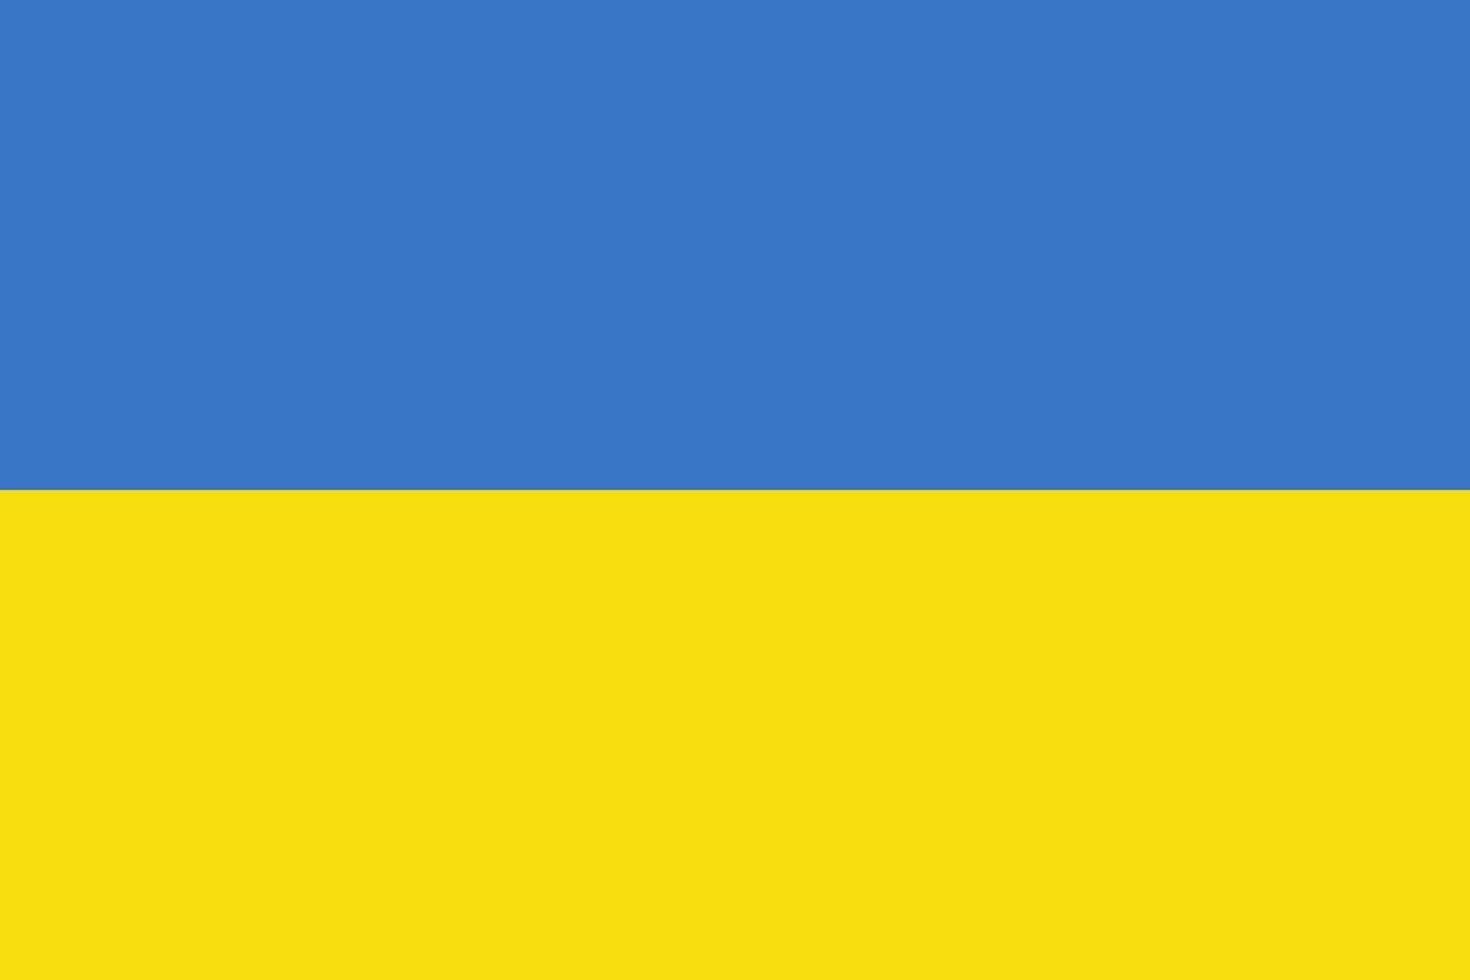 Ukrainian flag vector icon. The flag of Ukraine.